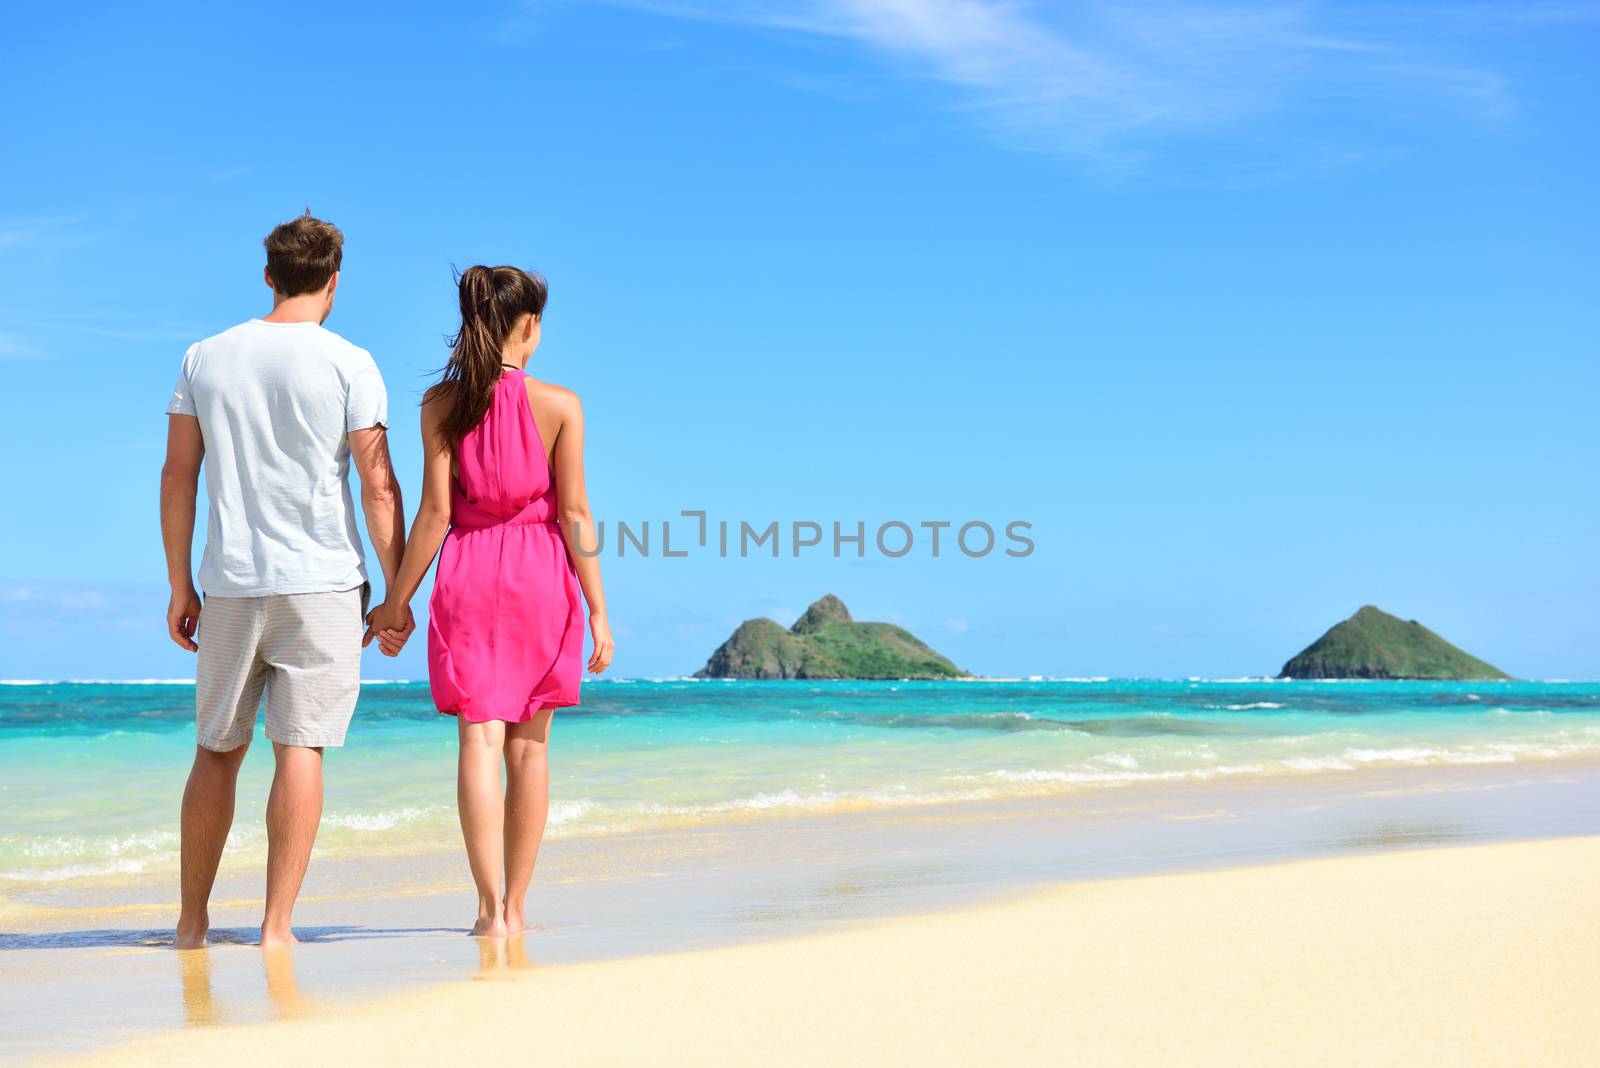 Beach summer holiday - couple on Hawaii vacation by Maridav